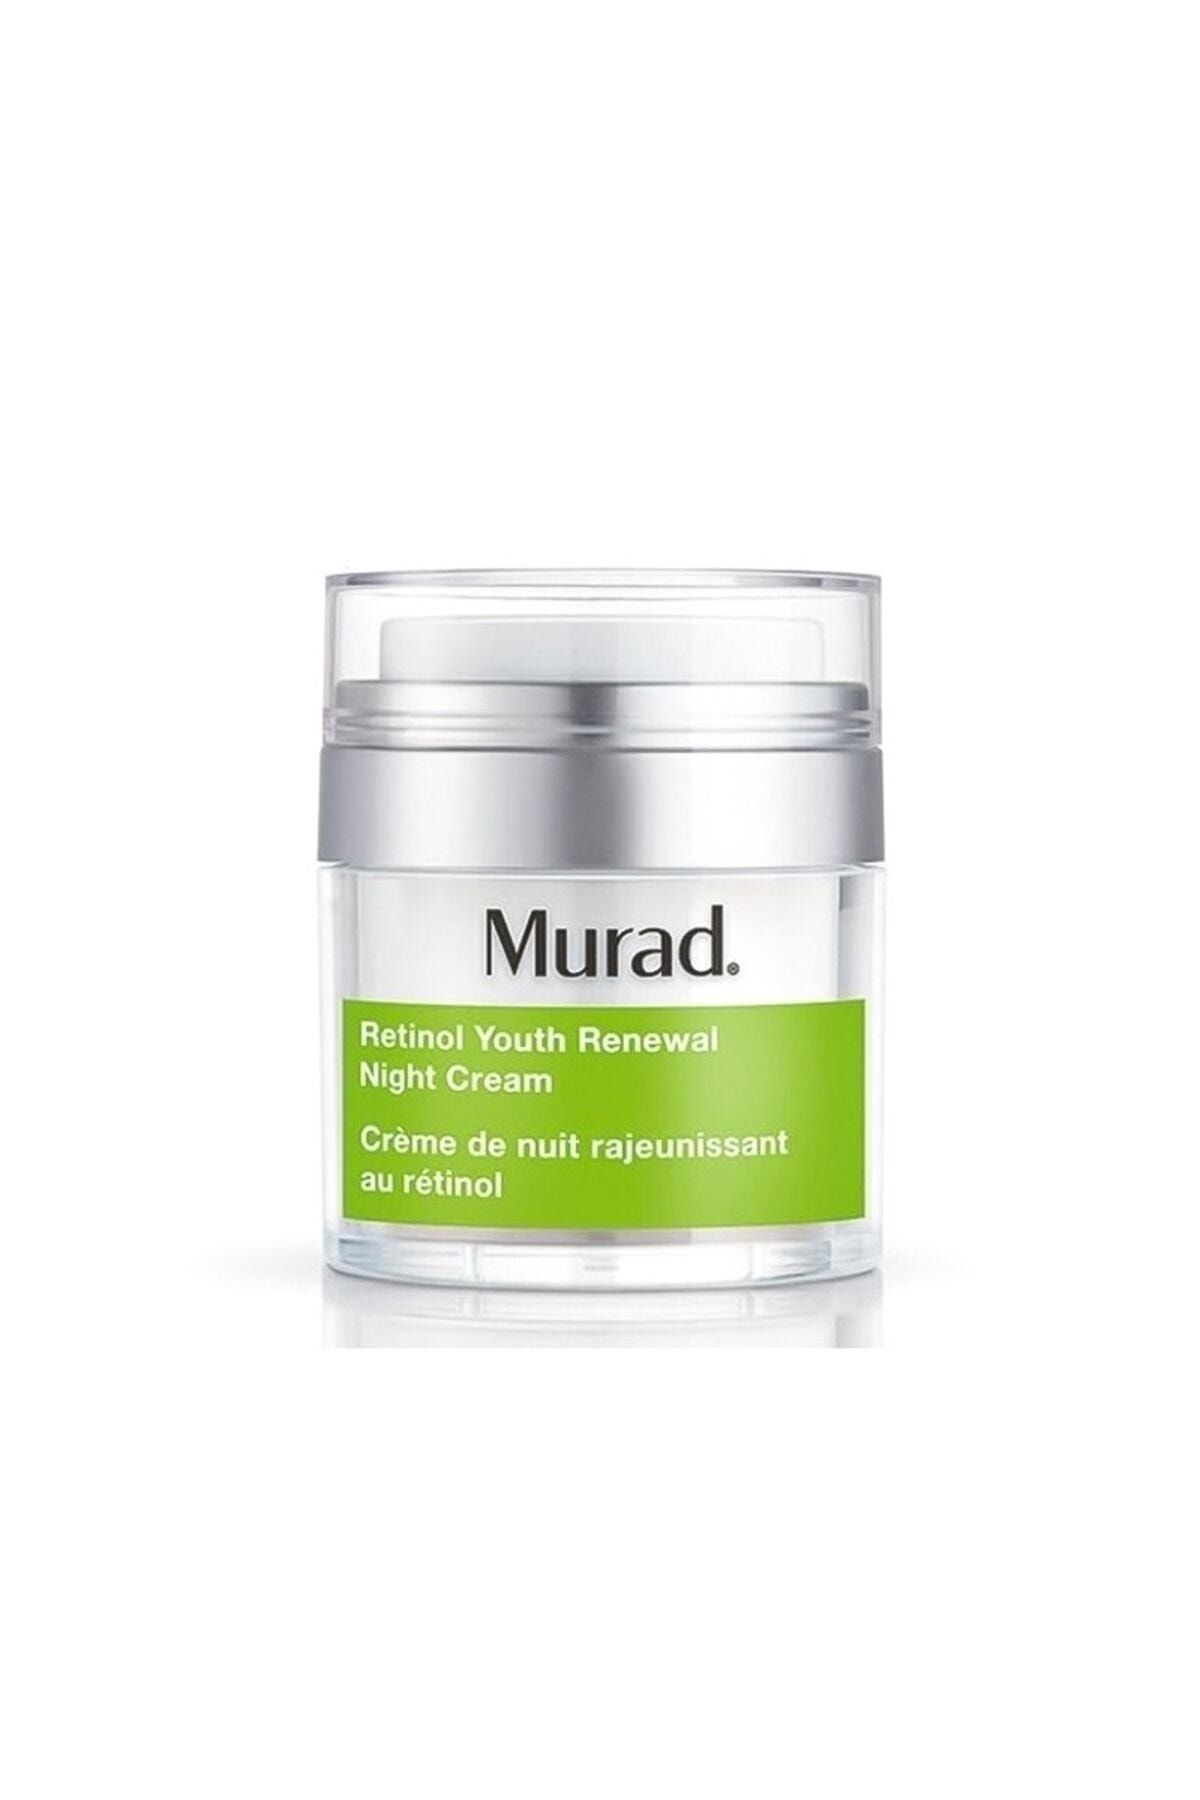 Murad Retinol Youth Renewal Night Cream - Yenileyici Retinol Içerikli Gece Kremi